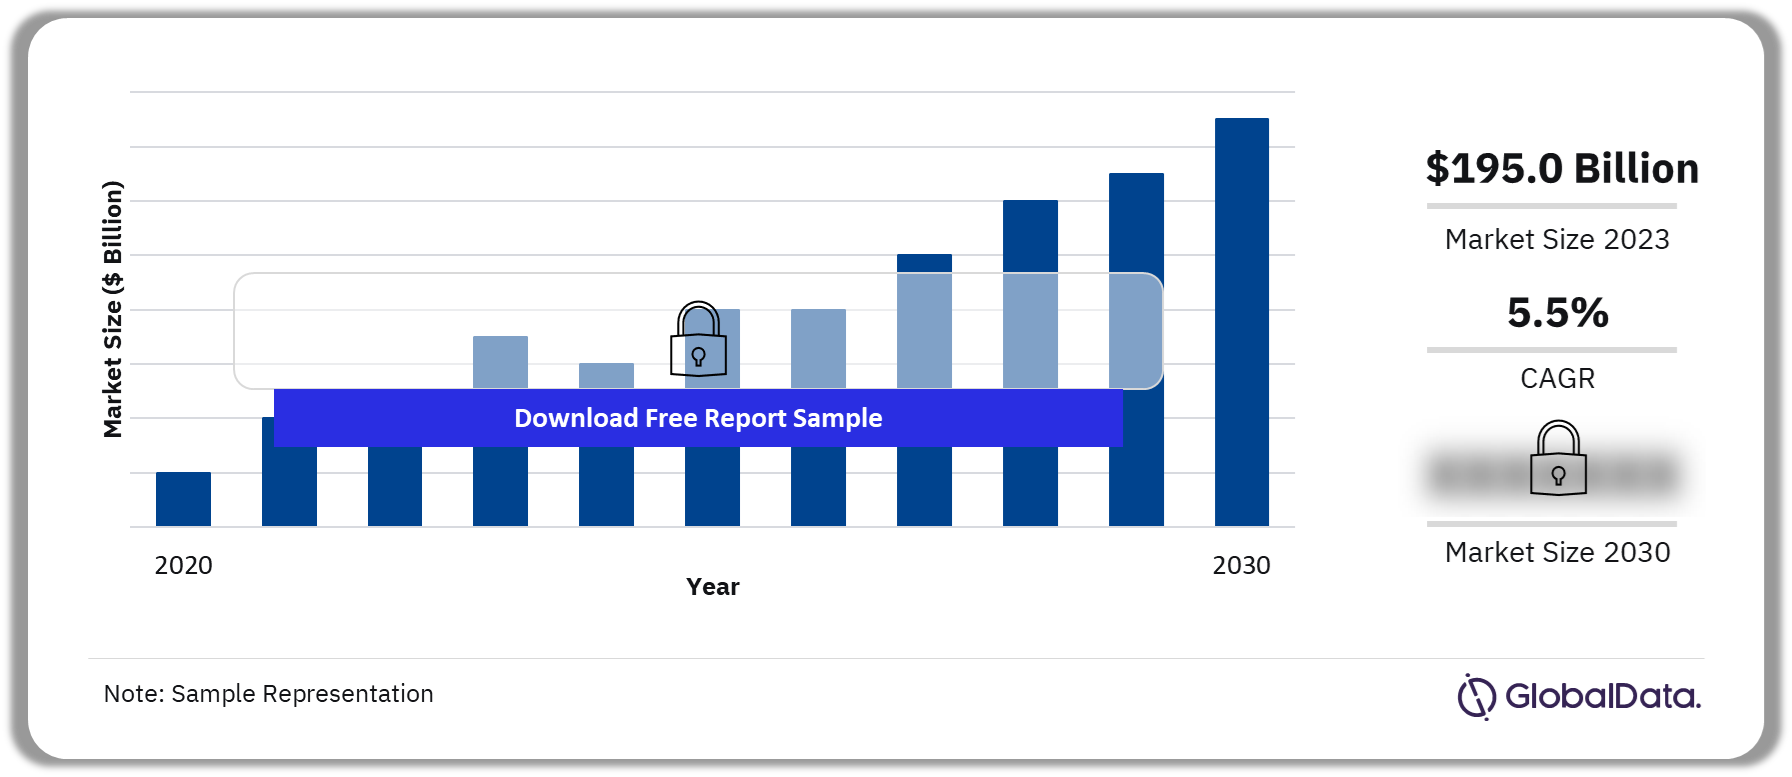 Stainless Steel Market Overview, 2020-2030 ($ Billion)